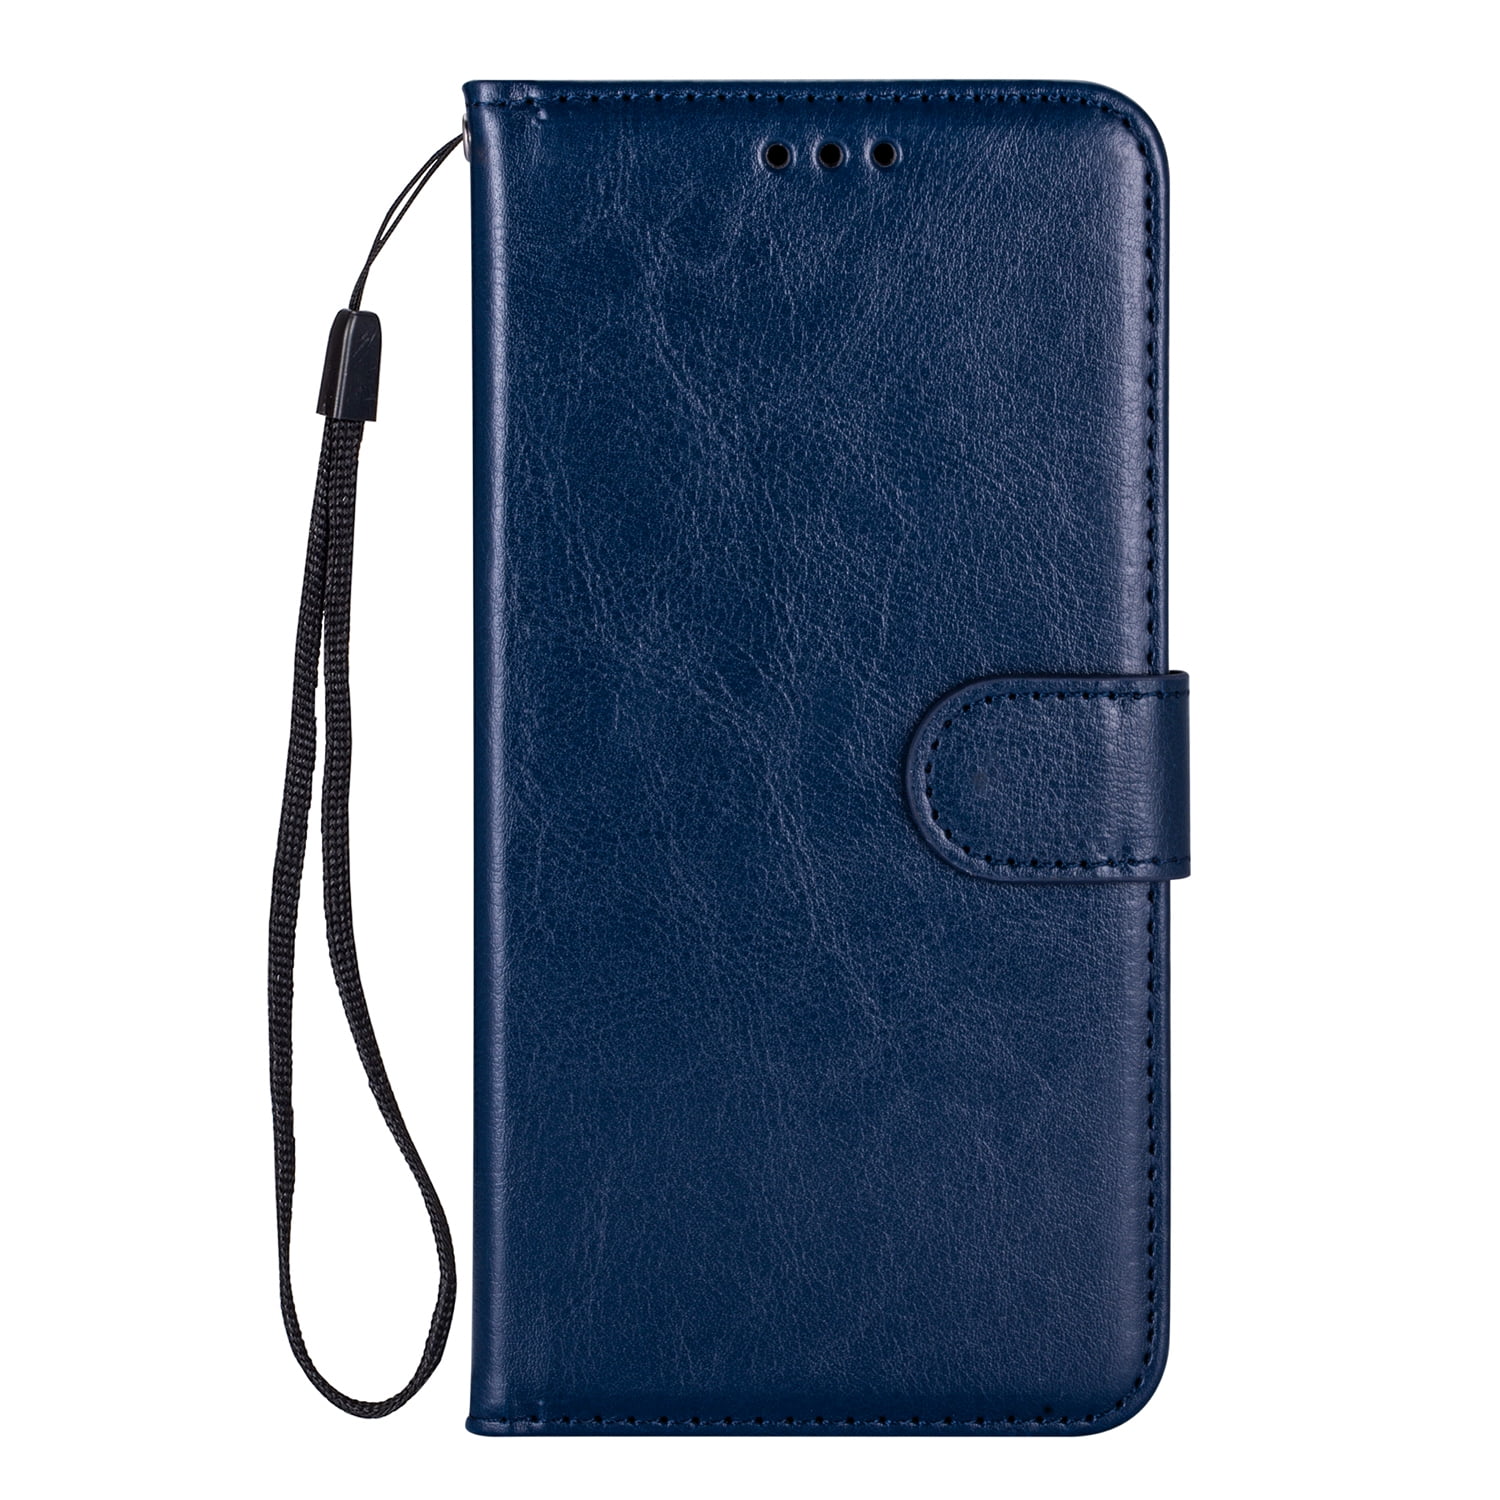 Galaxy A21s Case, Allytech Slim Fit PU Leather Folio Flip Kickstand ...